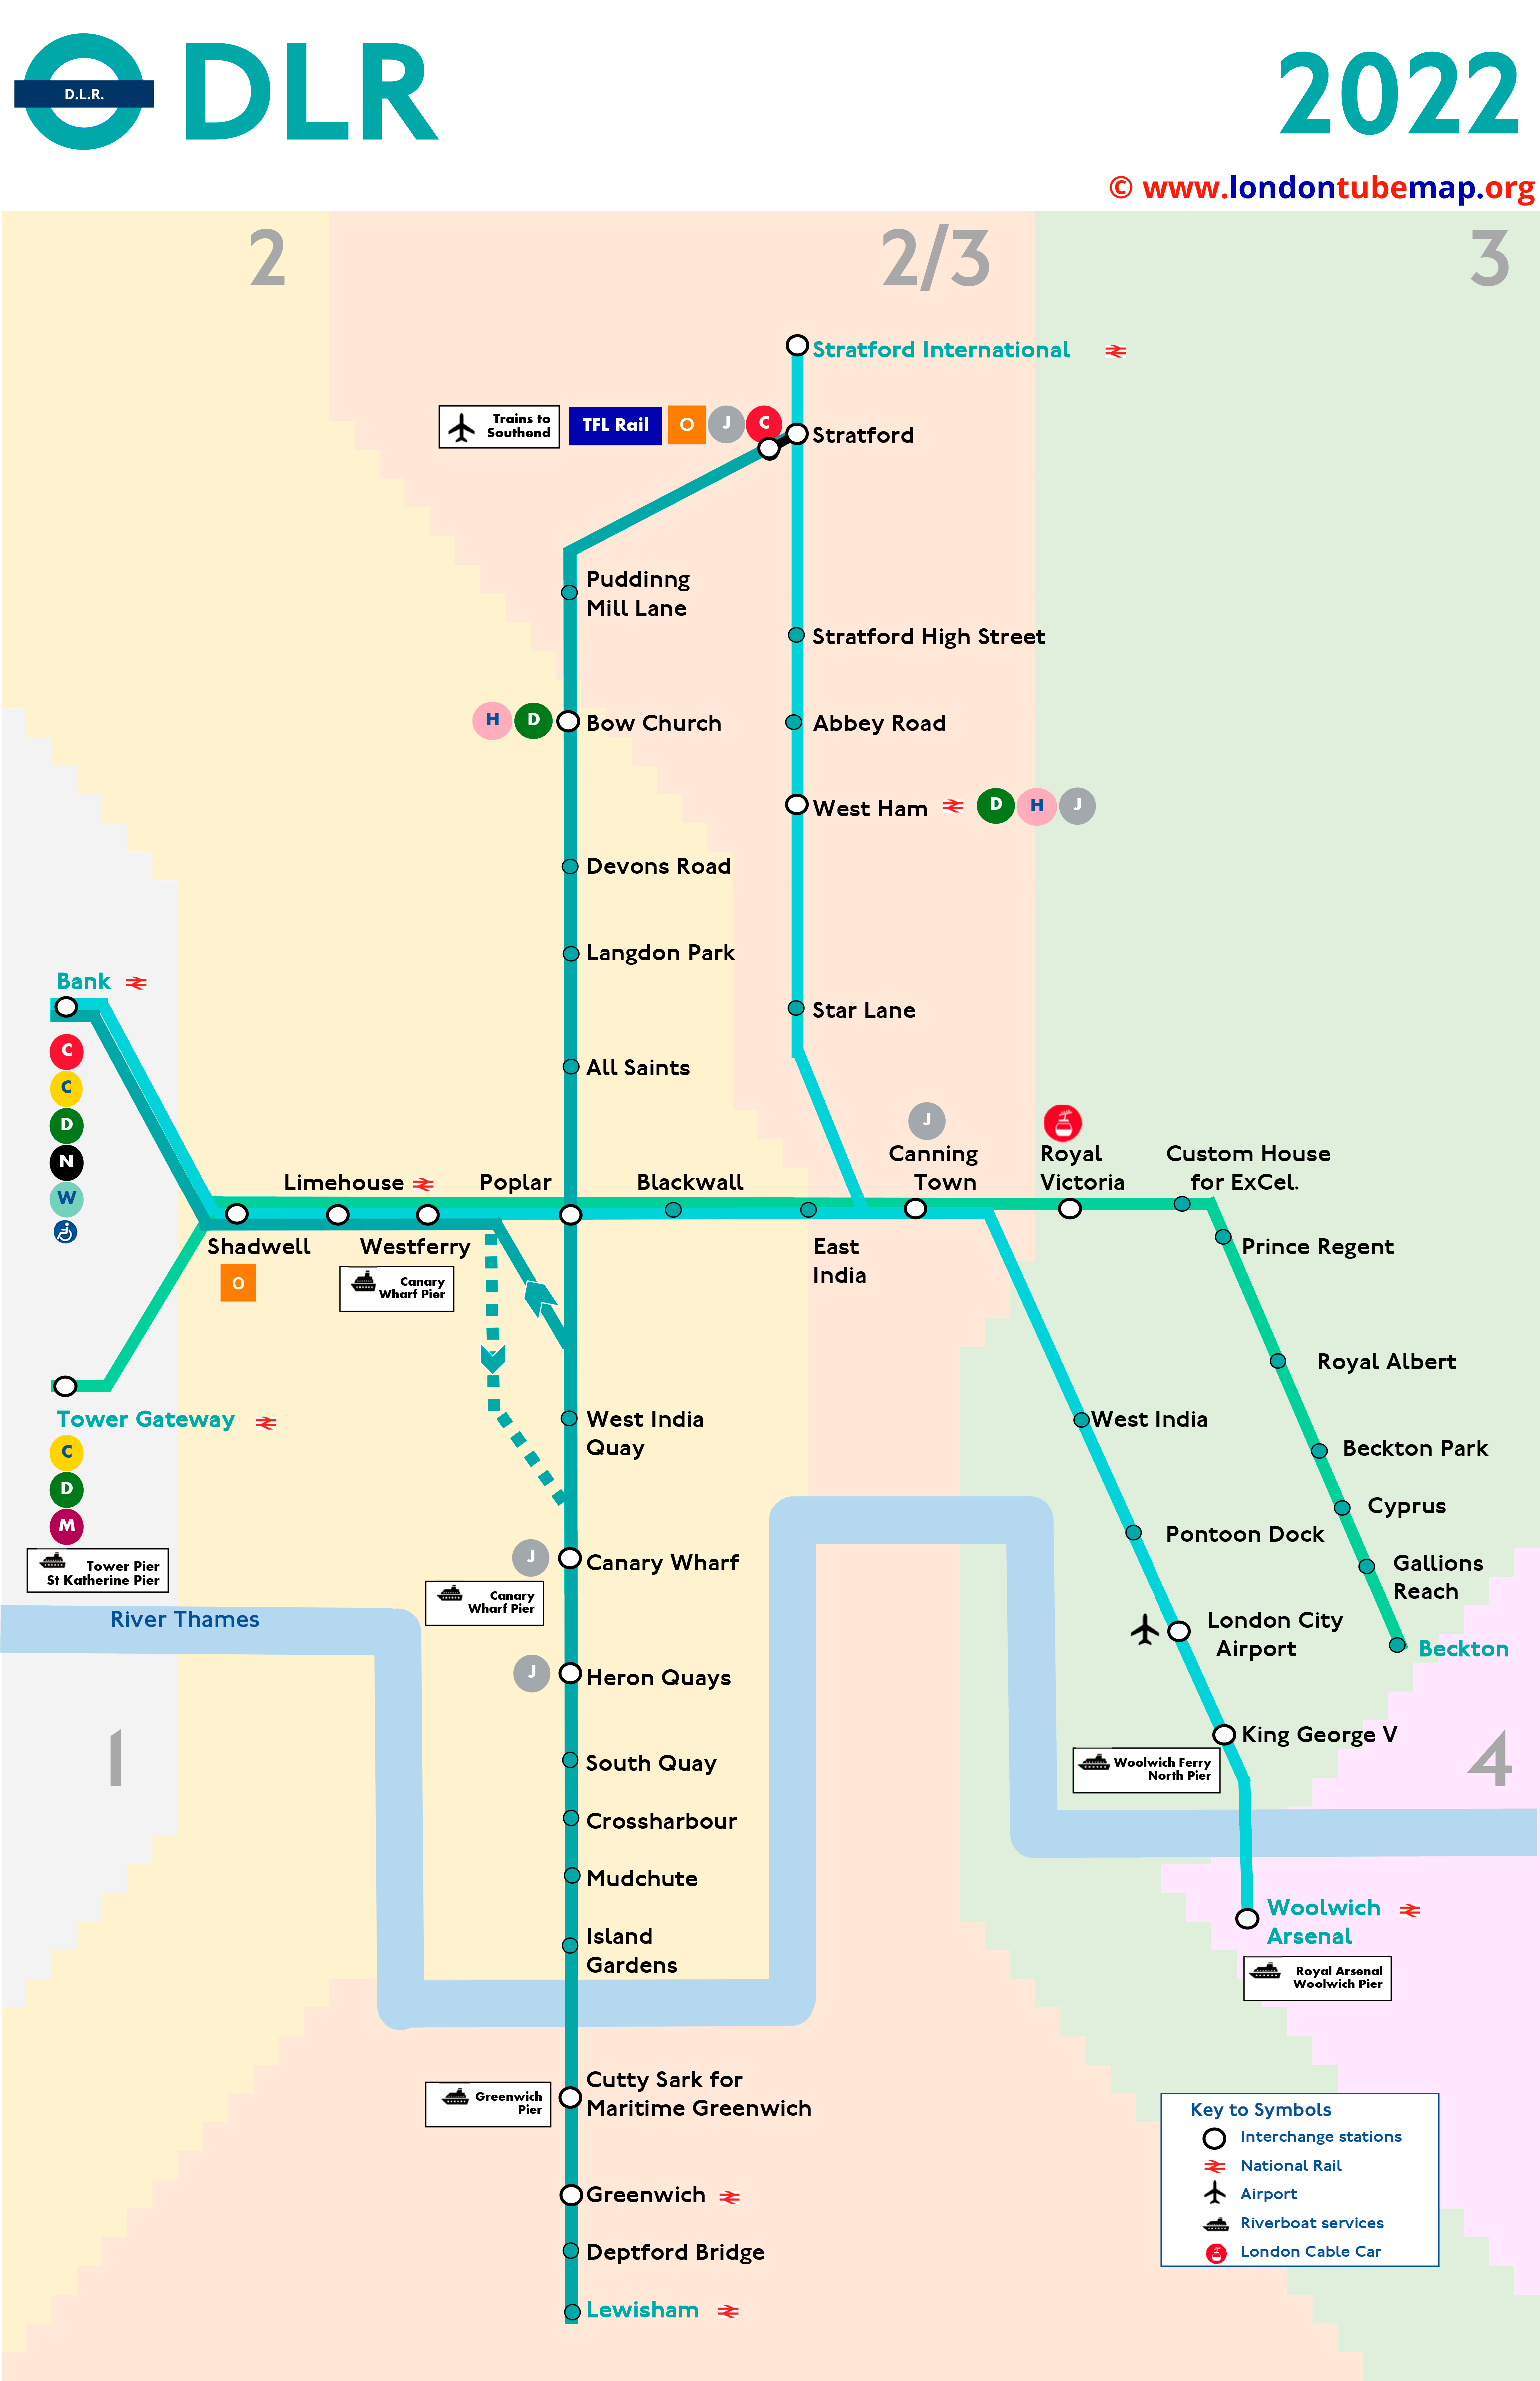 London DLR map 2022